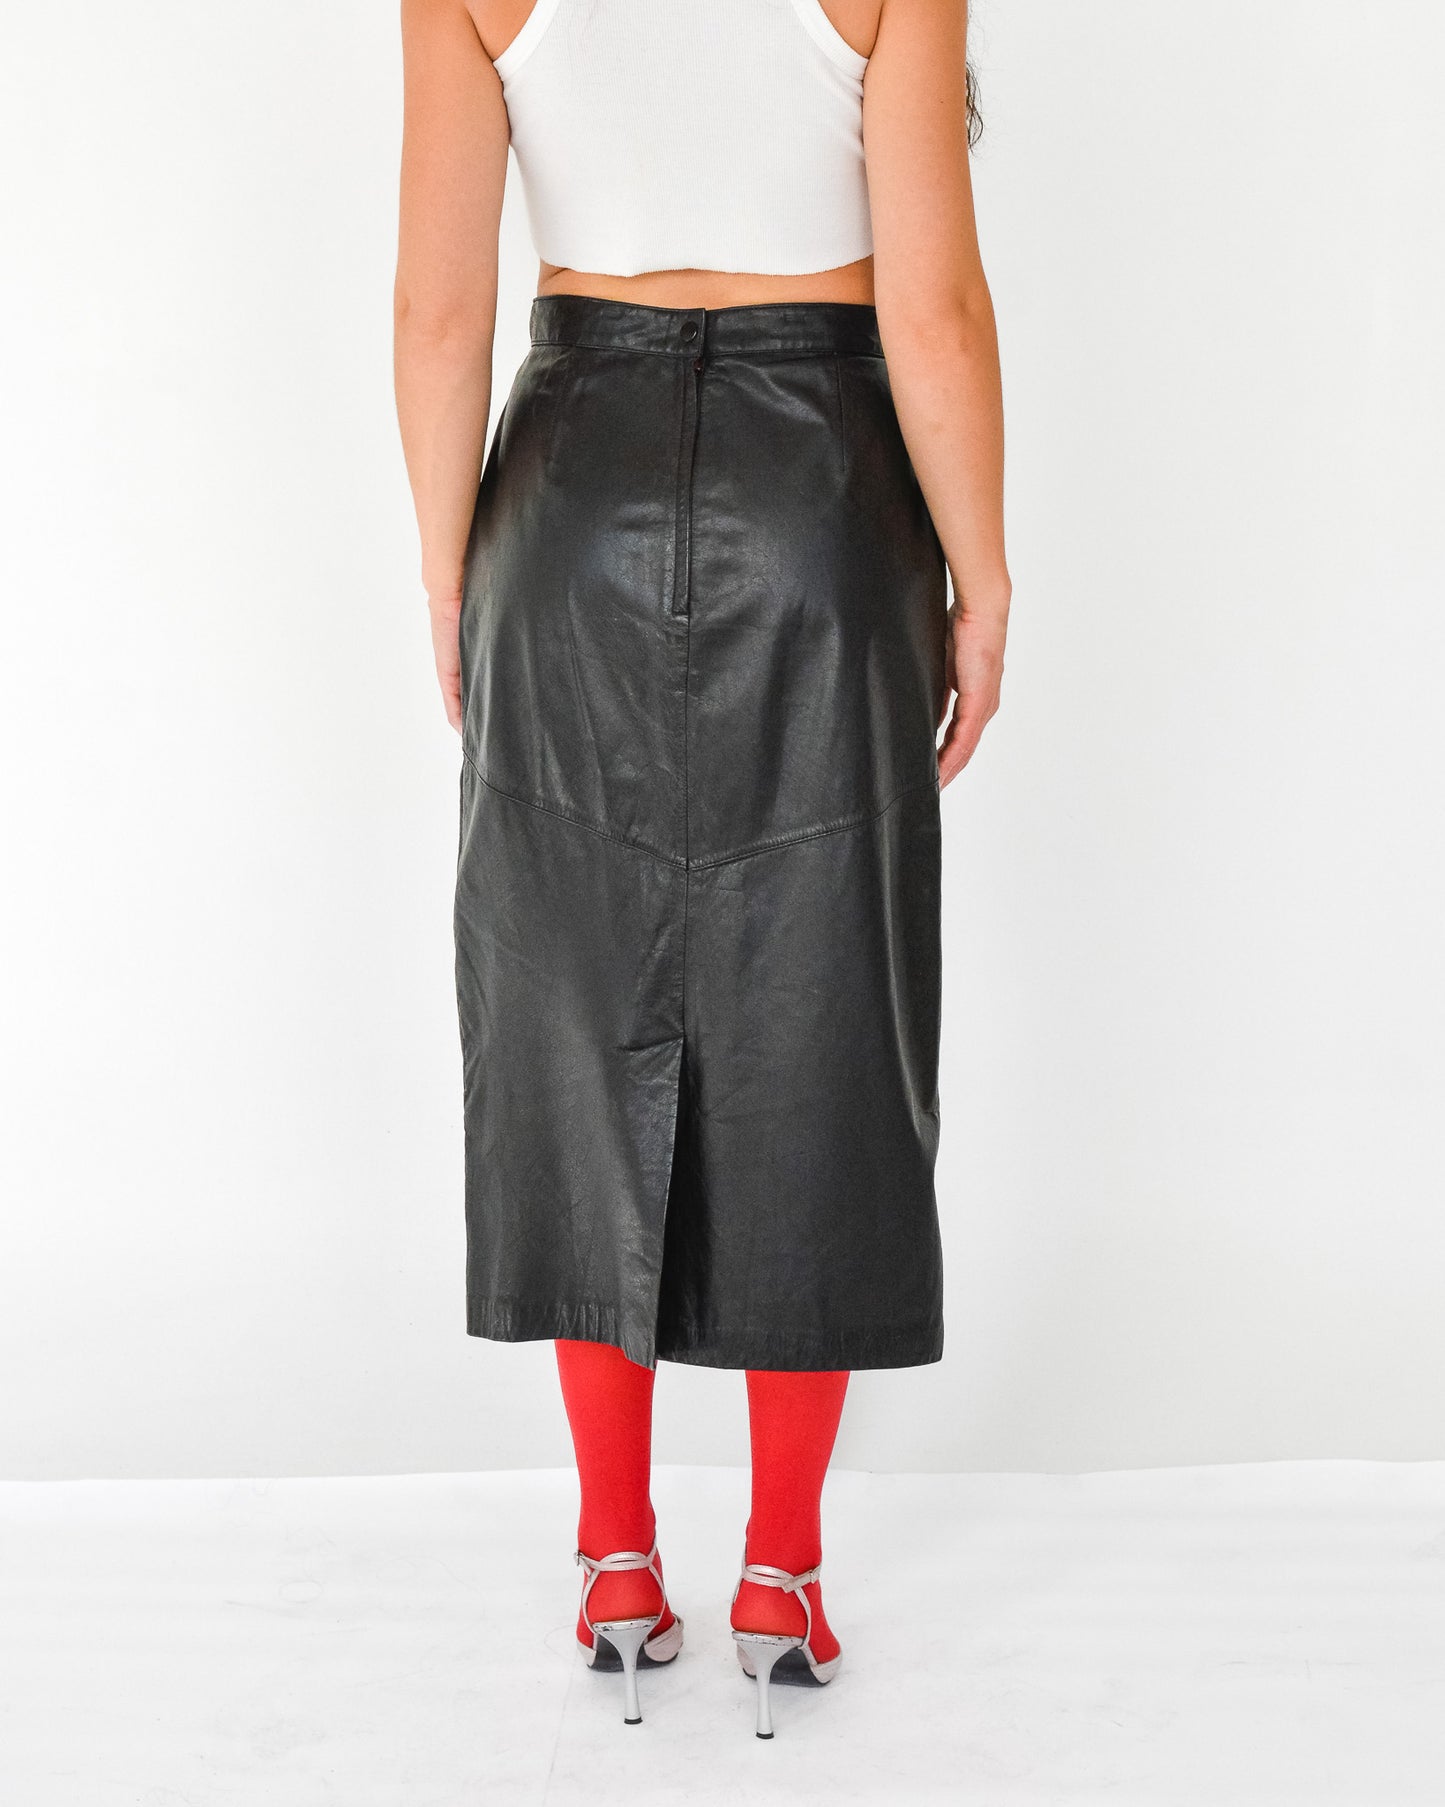 Black Leather Midi Skirt (M-L)